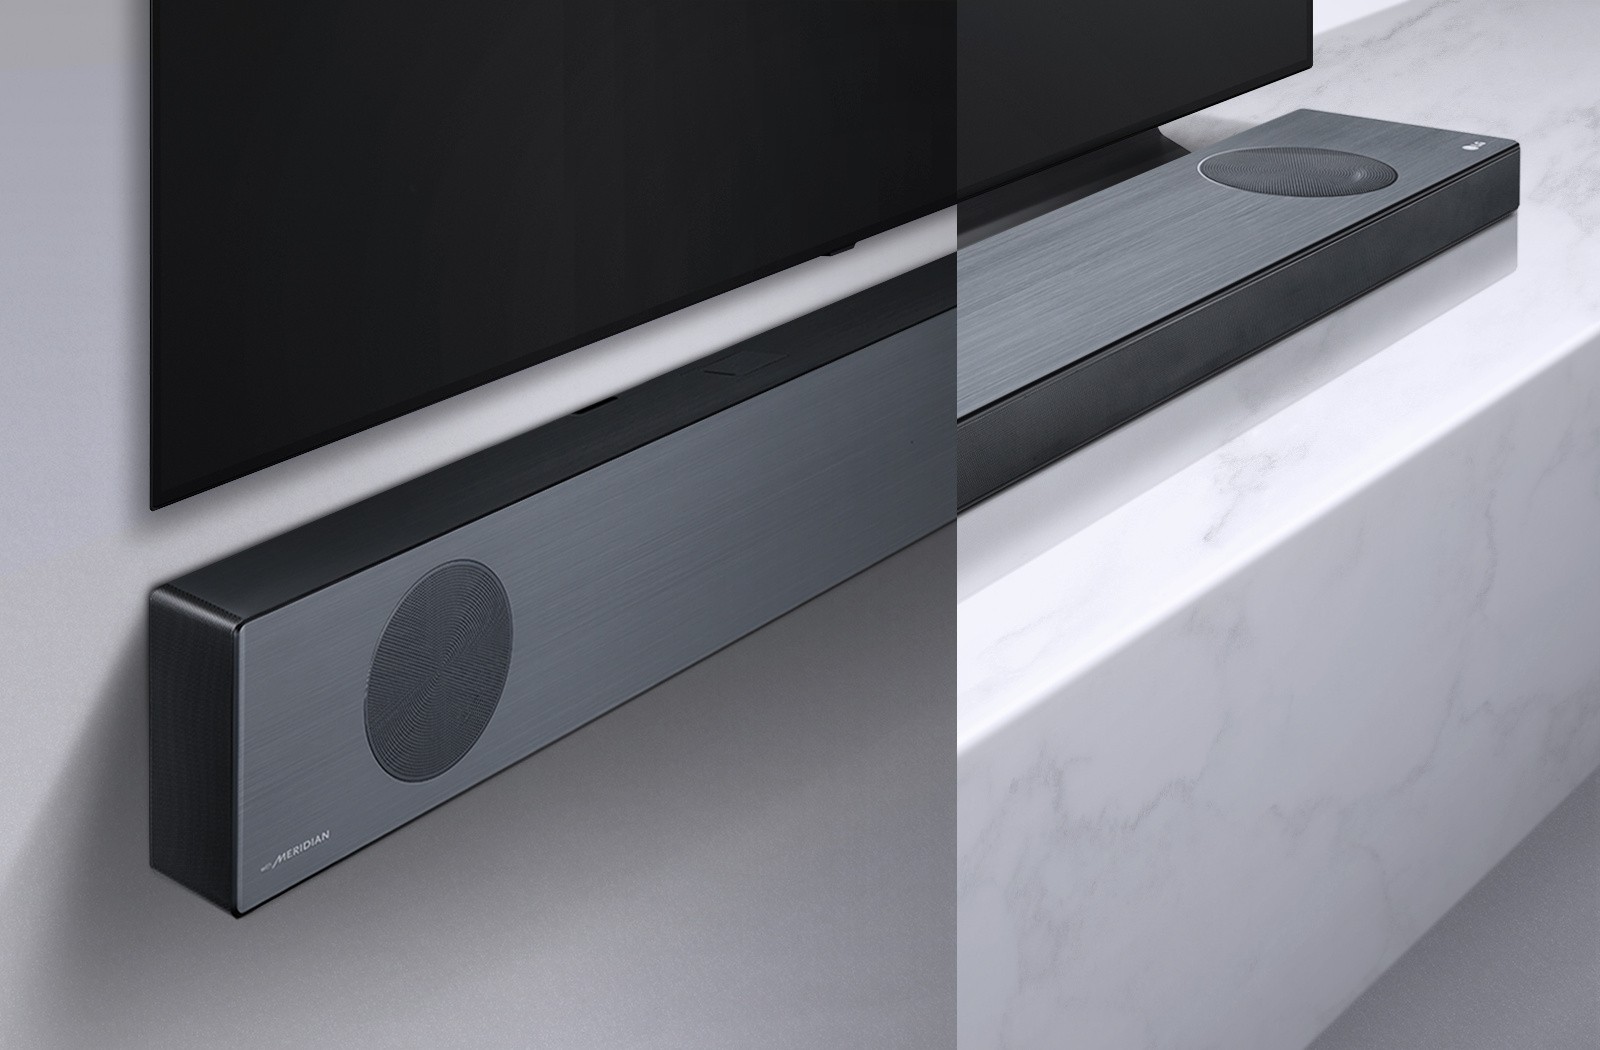 LG Soundbar model SL9YG fixed to a wall below an LG TV next to an image of it placed on a shelf